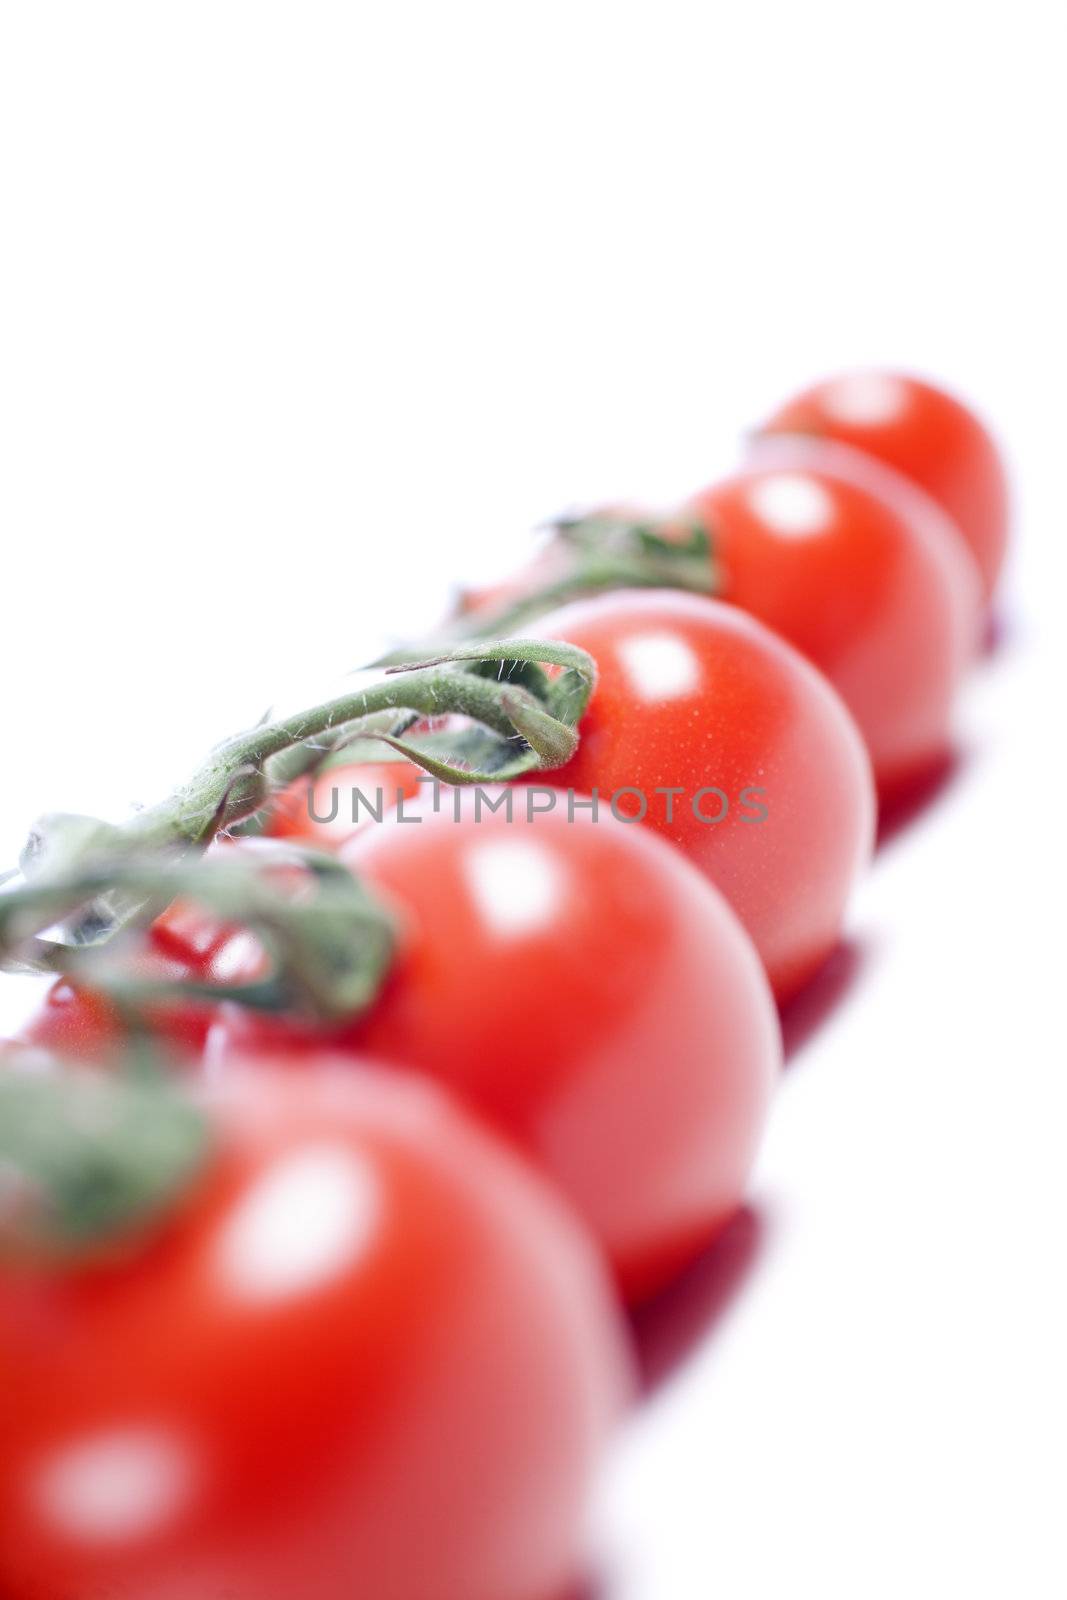 Tomatoes on the vine by studiofi